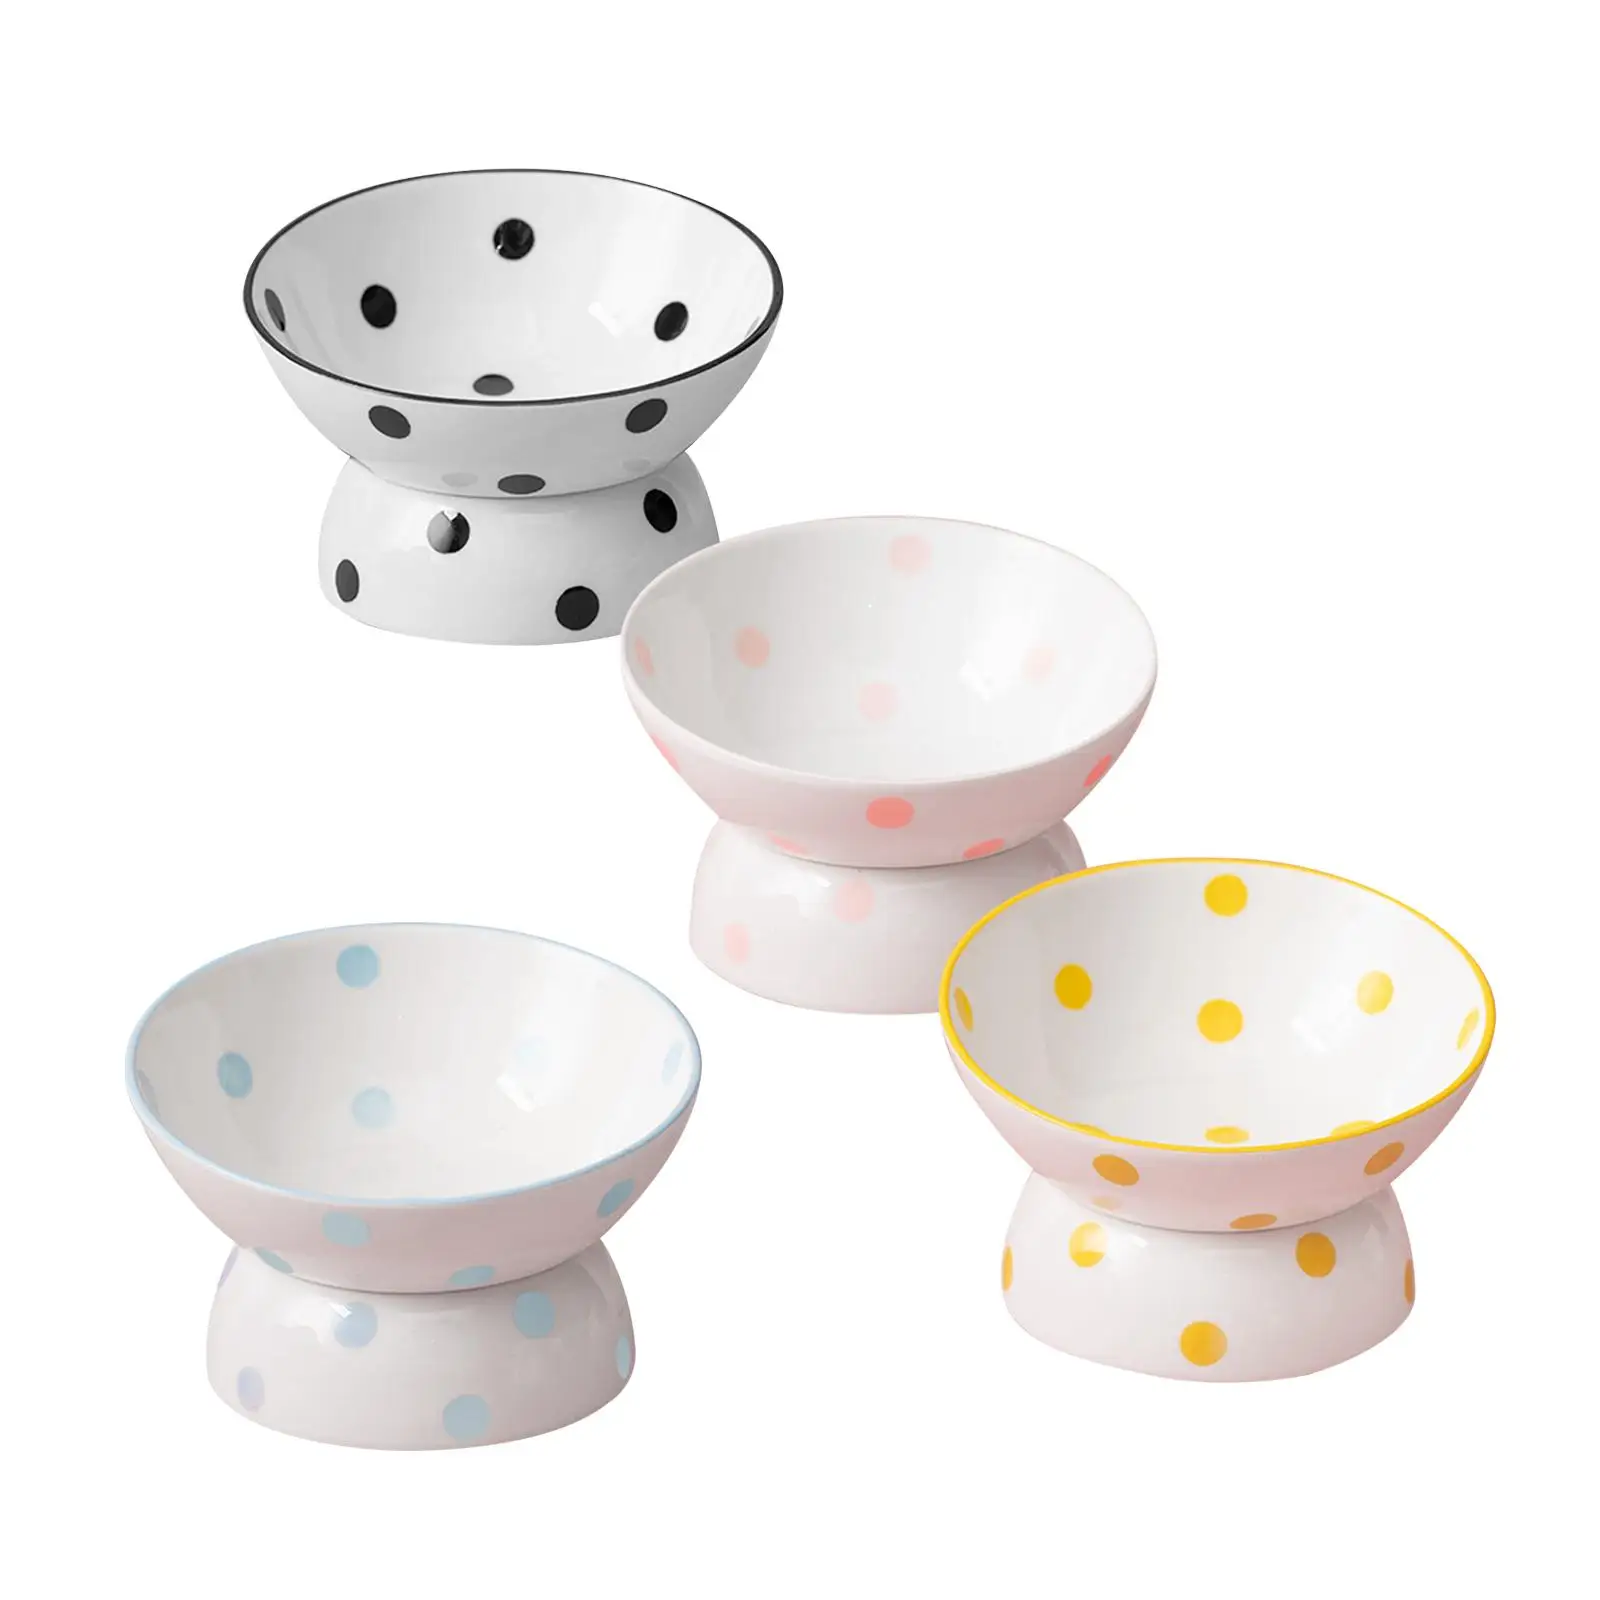 Capacity 200ml Ceramic Elevated Cat Feeder Bowl Slant Porcelain Pet Cat Dish Cat Feeding Watering Supplies Anti Skid Stable Base